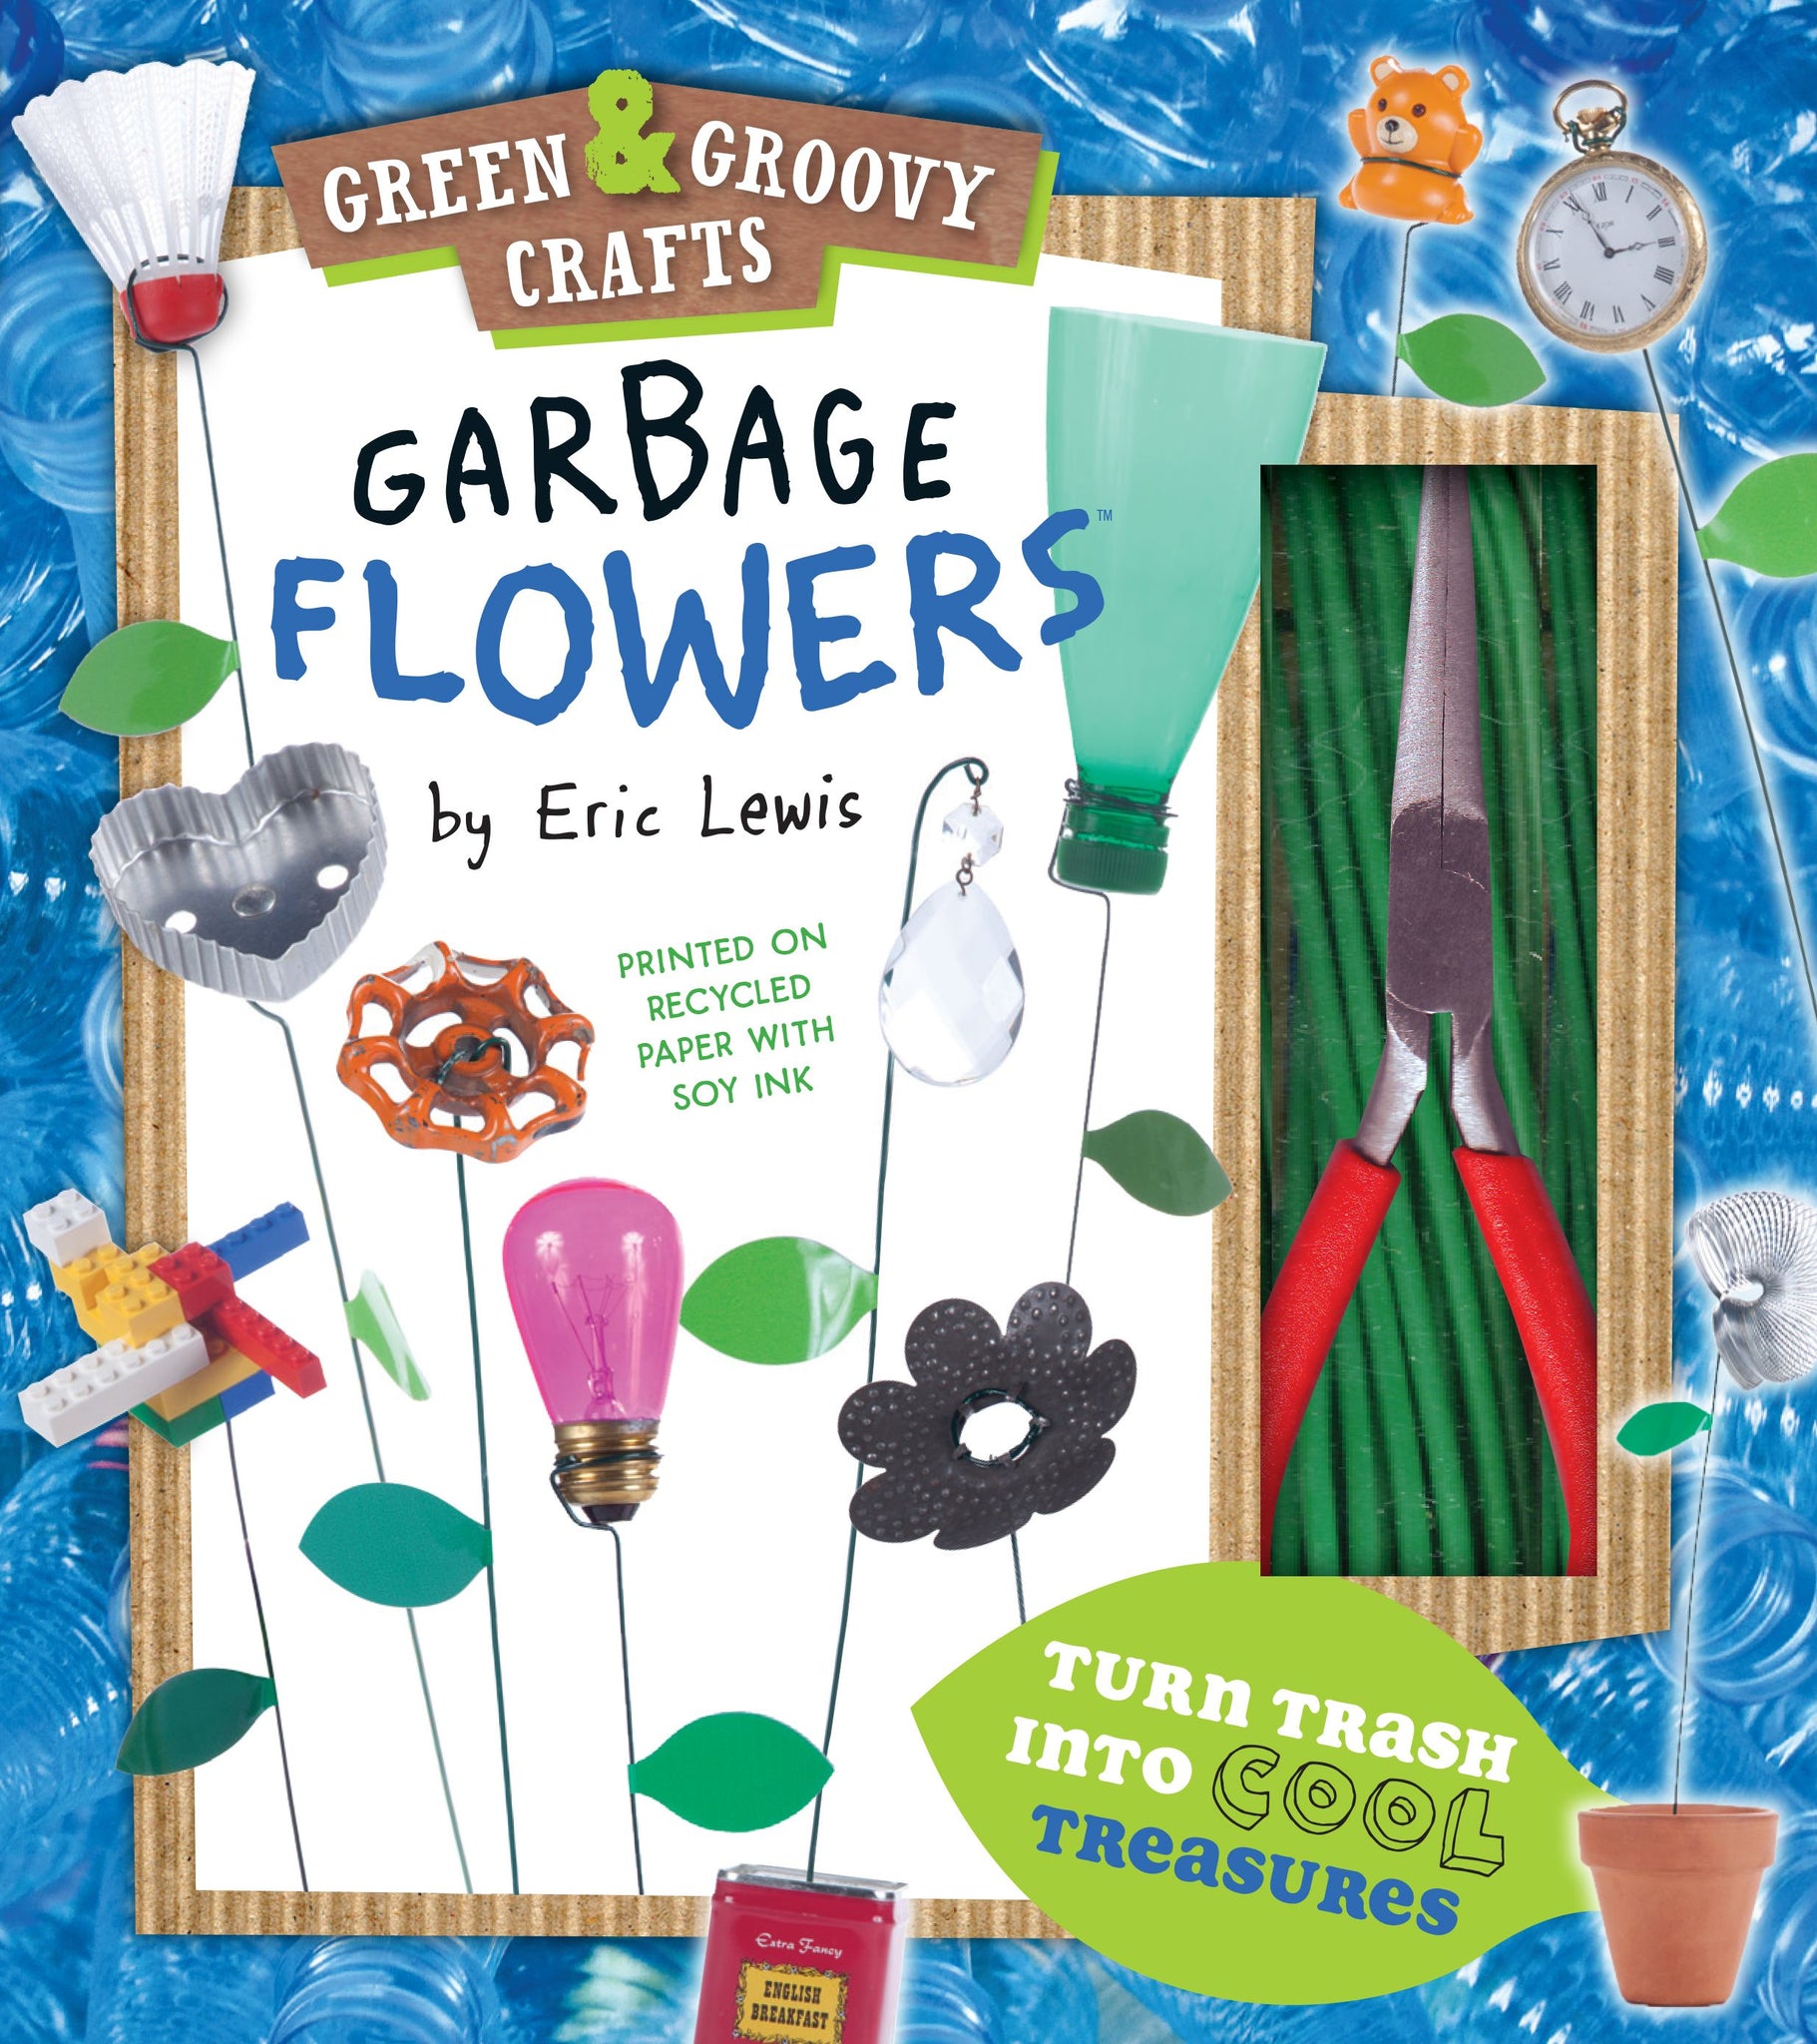 Garbage Flowers : Green & Groovy Crafts